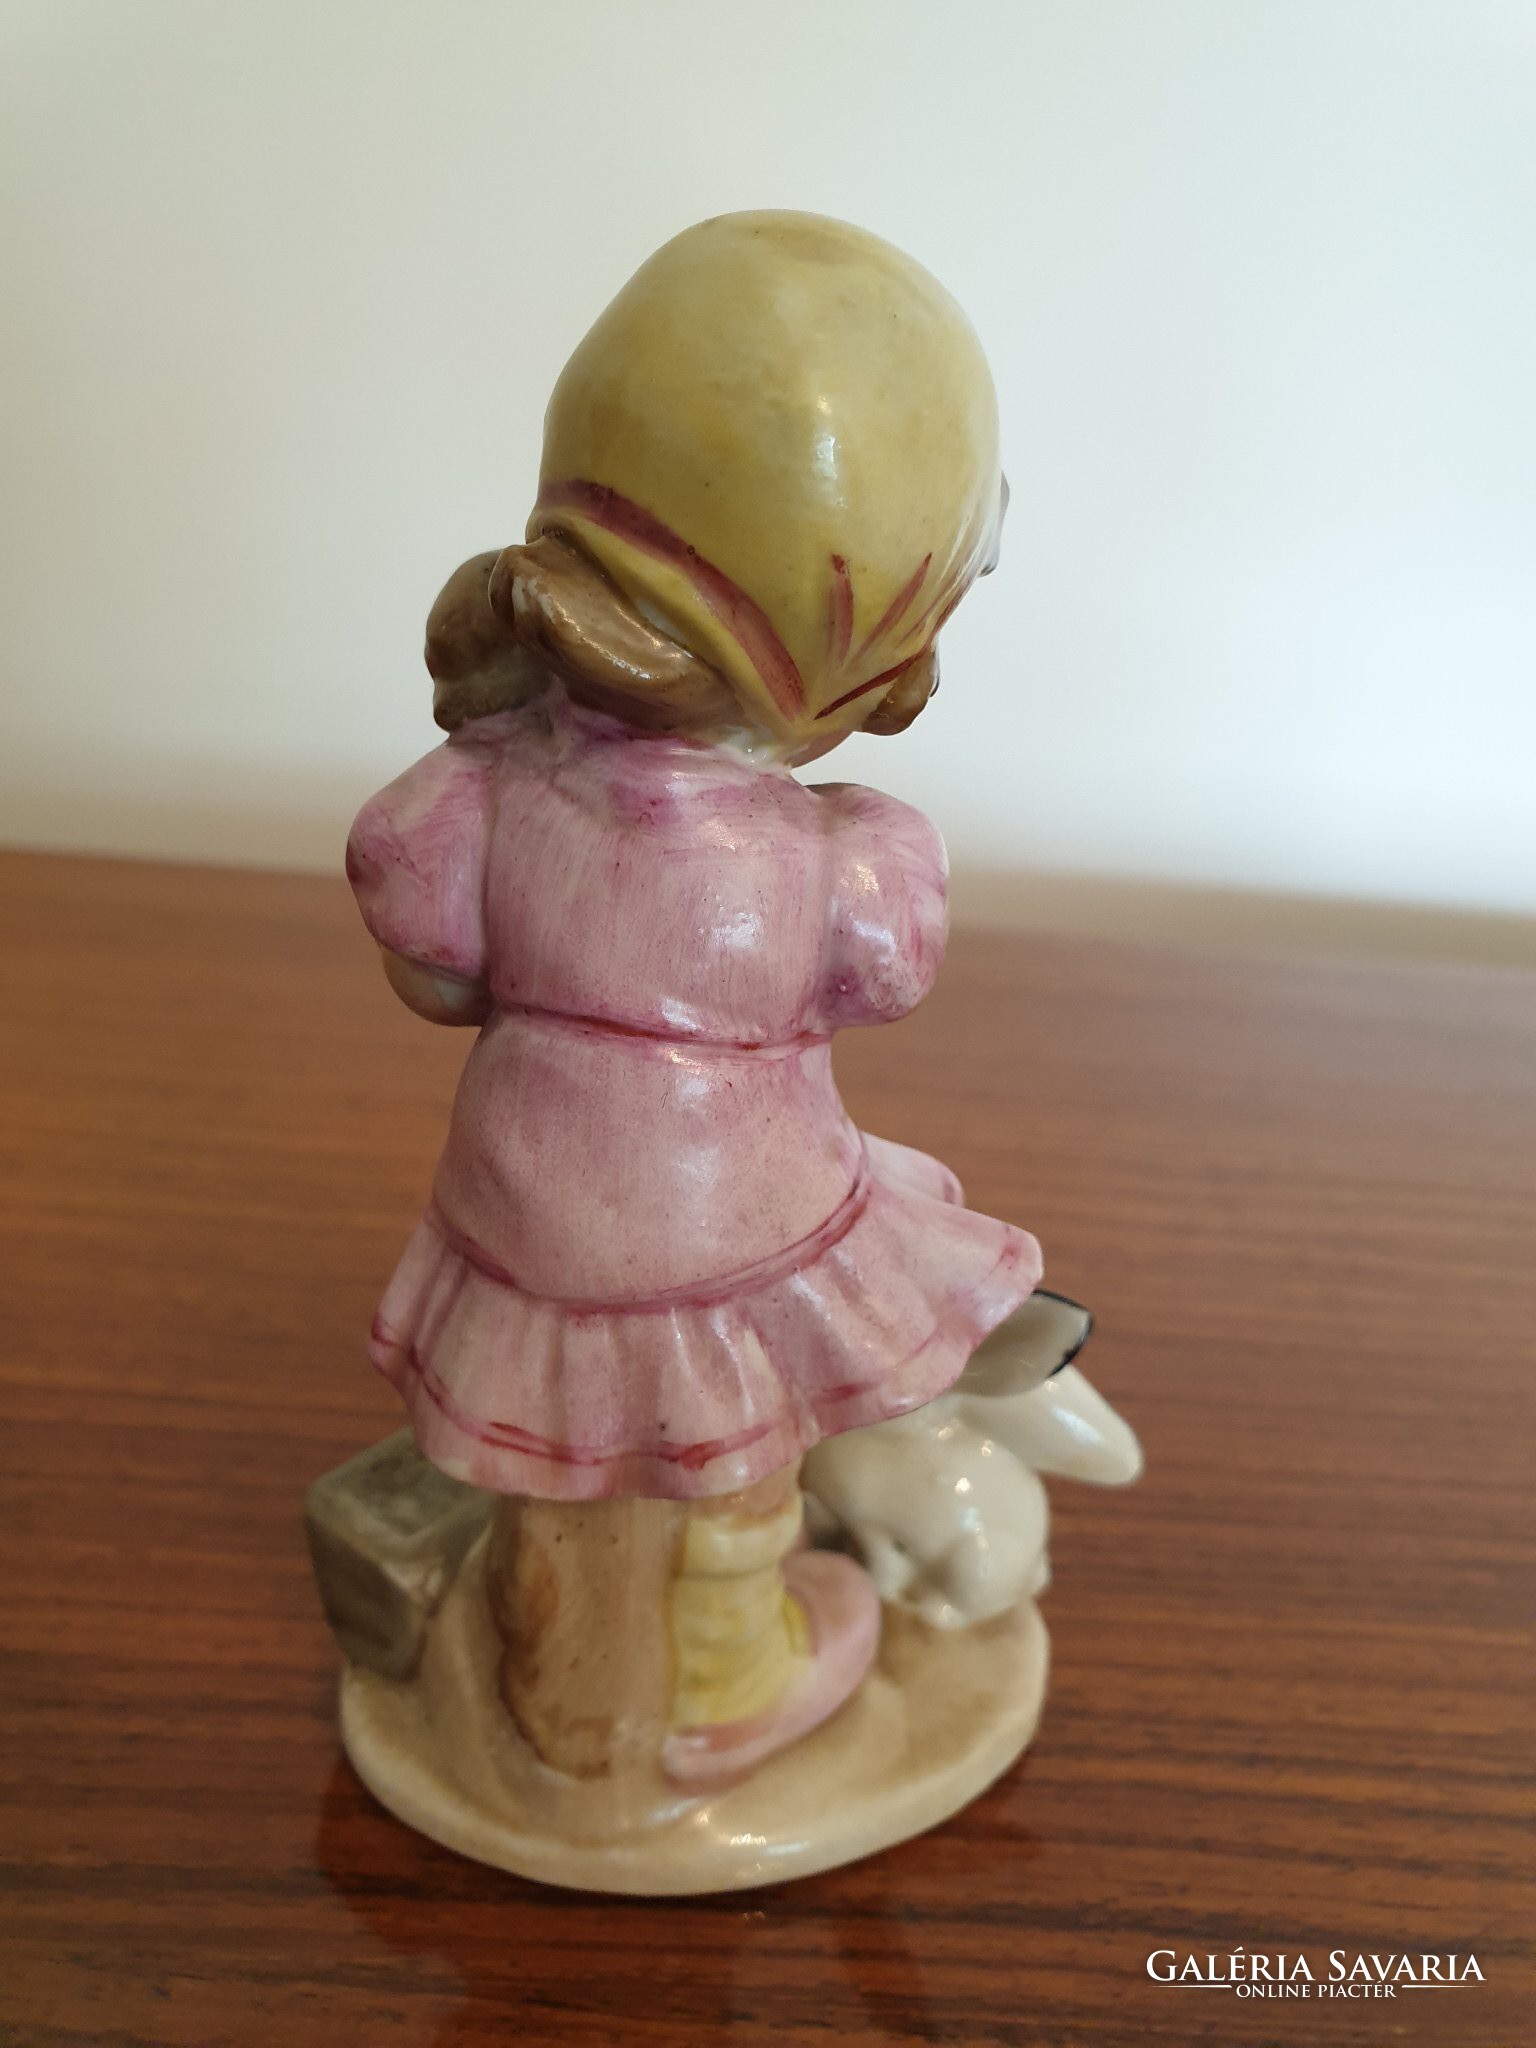 Old wagner & apel bertram porcelain doll baby girl with bunny and car  vintage figure - Porcelains